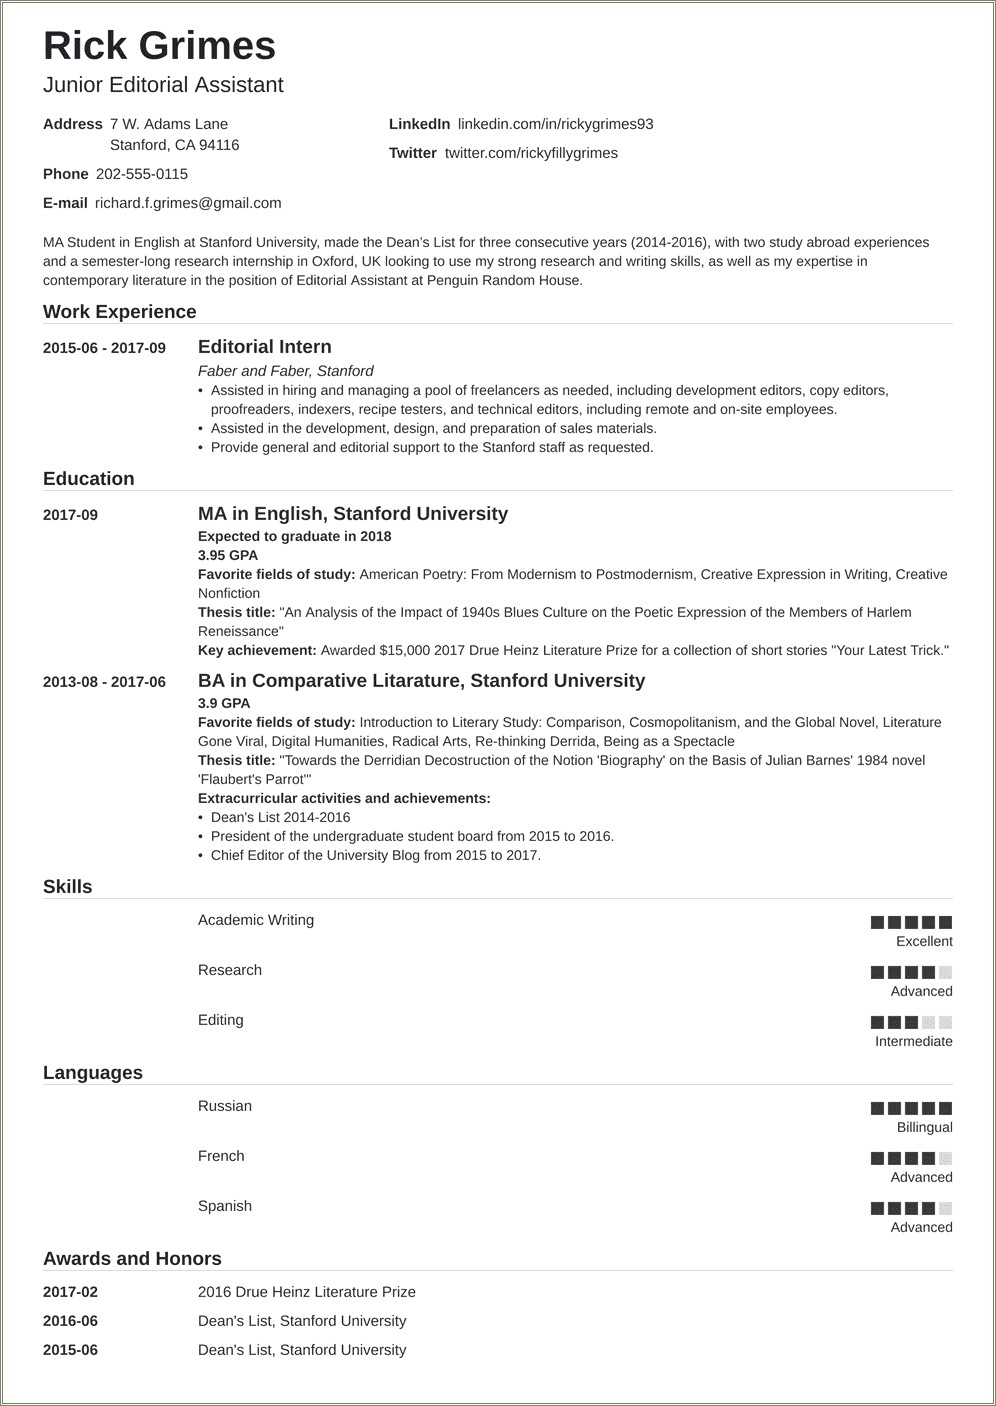 Resume Summary For Entry Level Help Desk